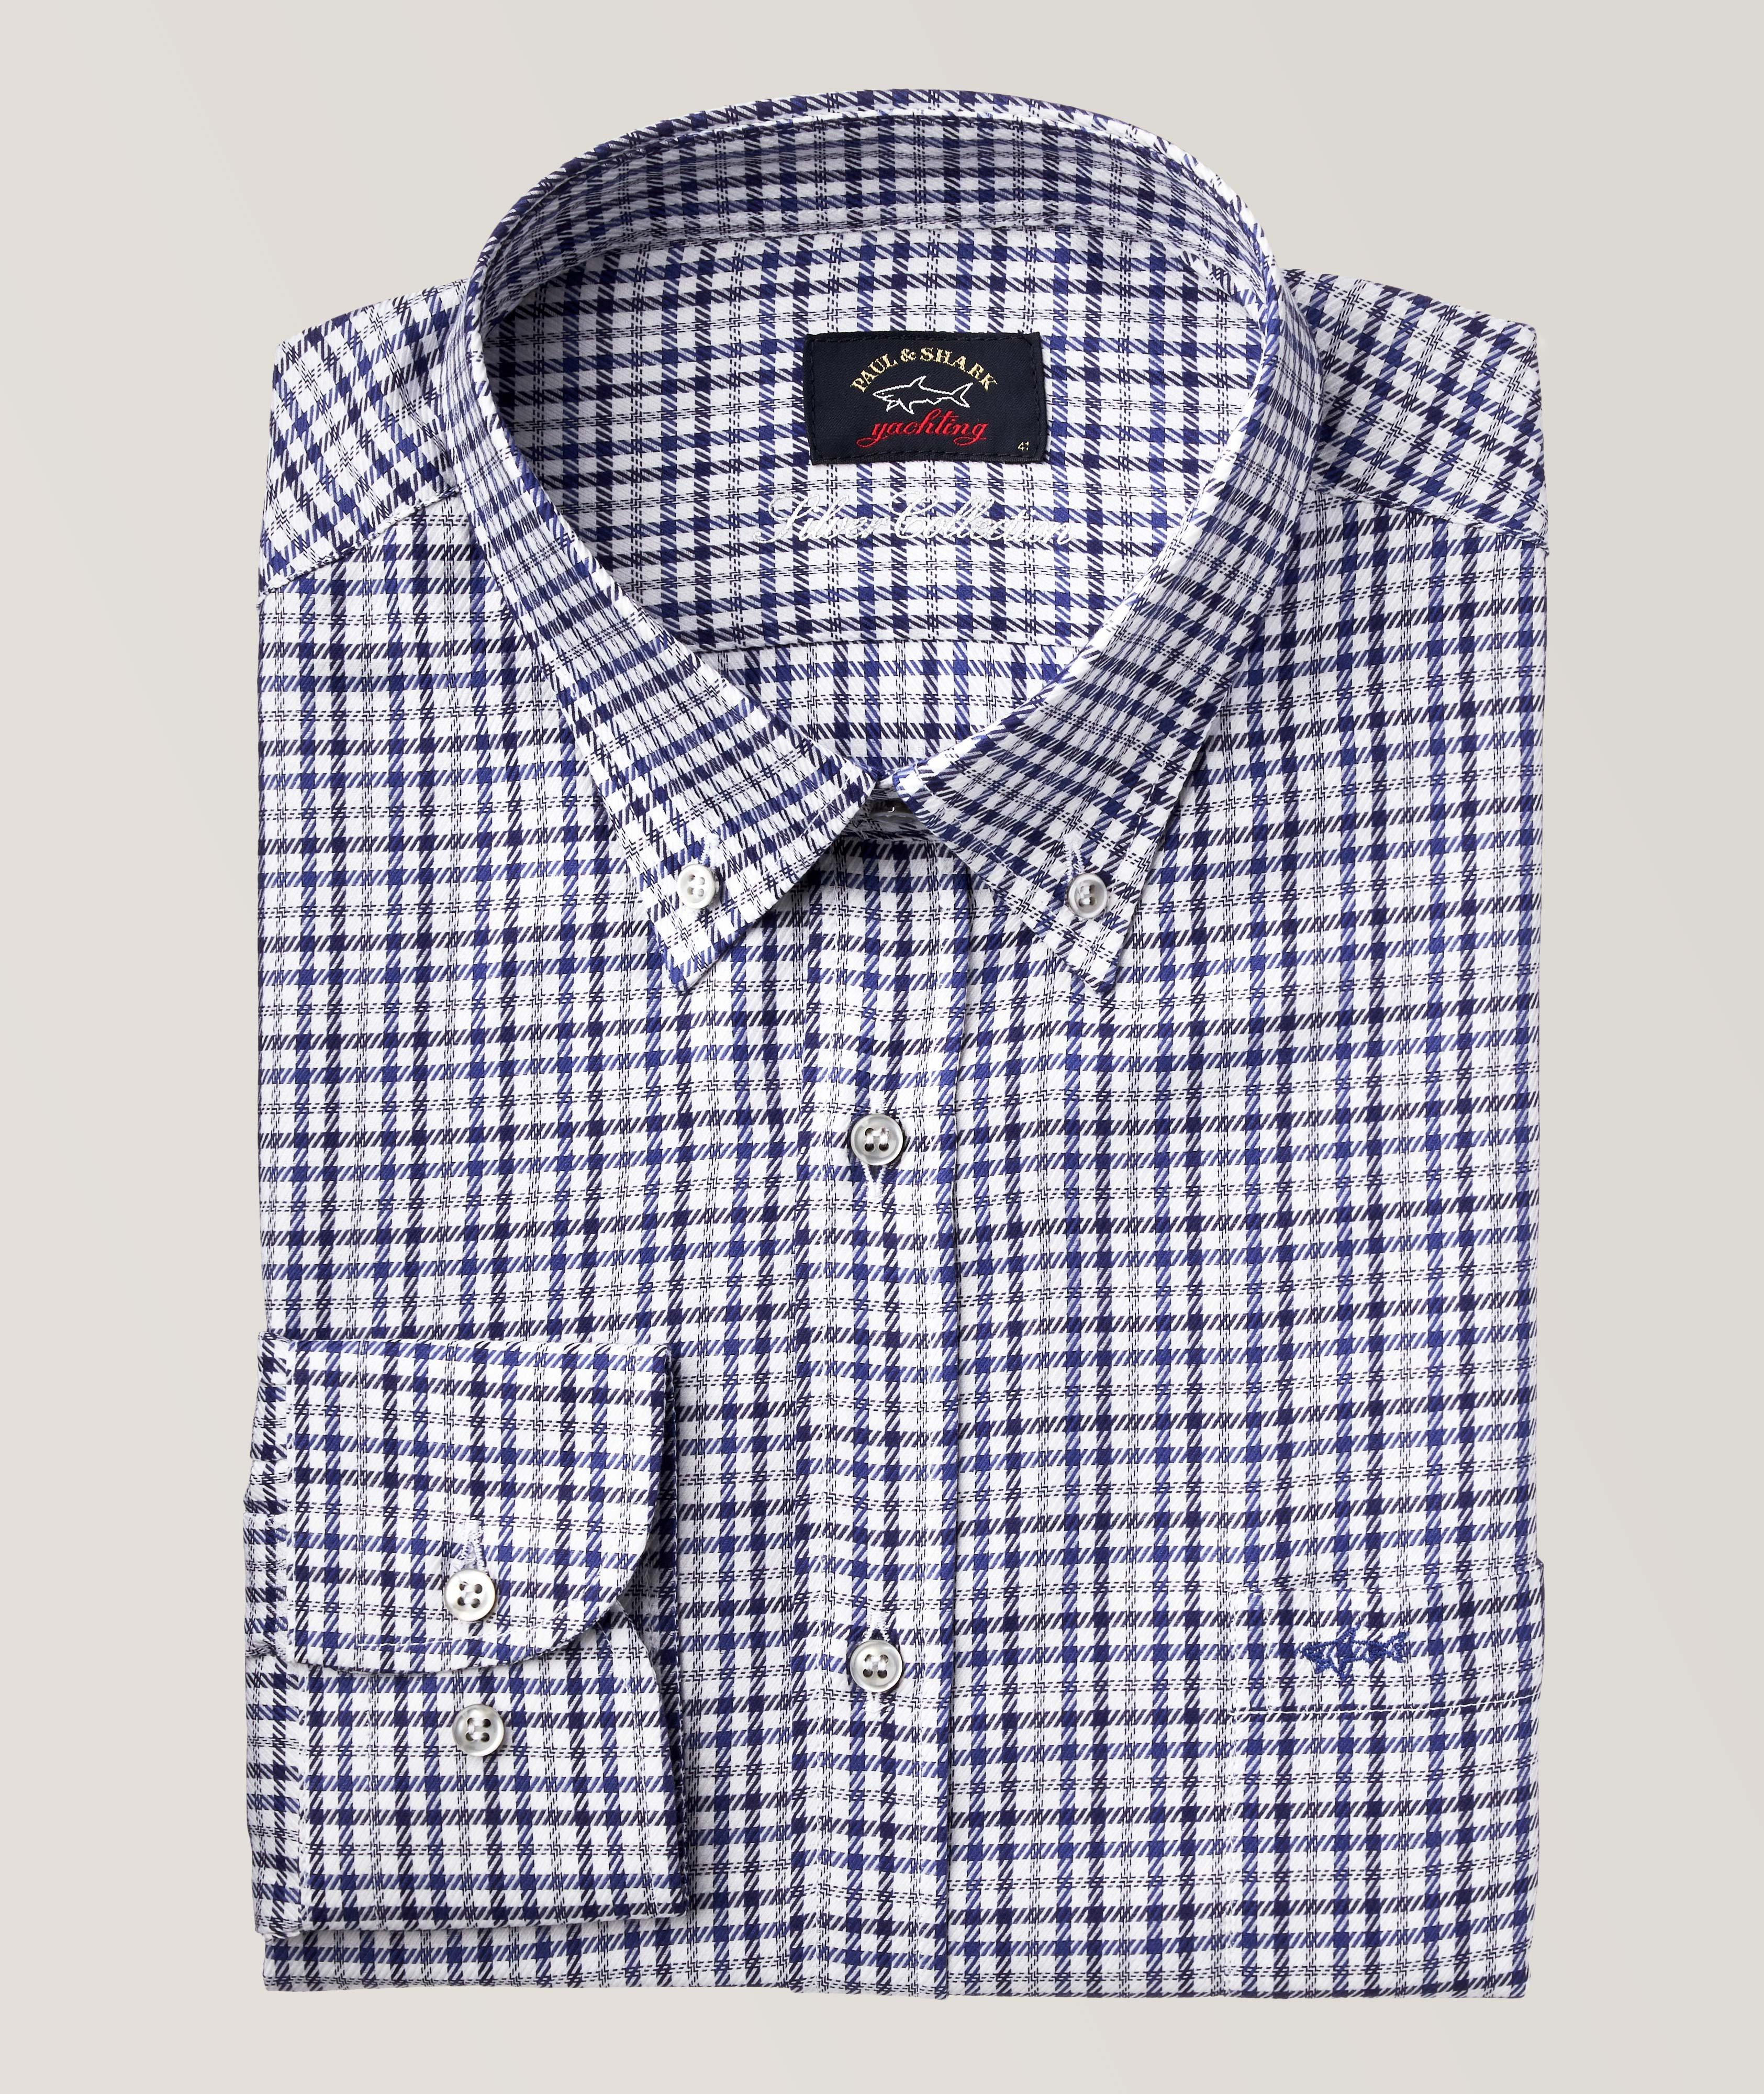 J-Fit Miniature Checkered Pattern Cotton Sport Shirt image 0